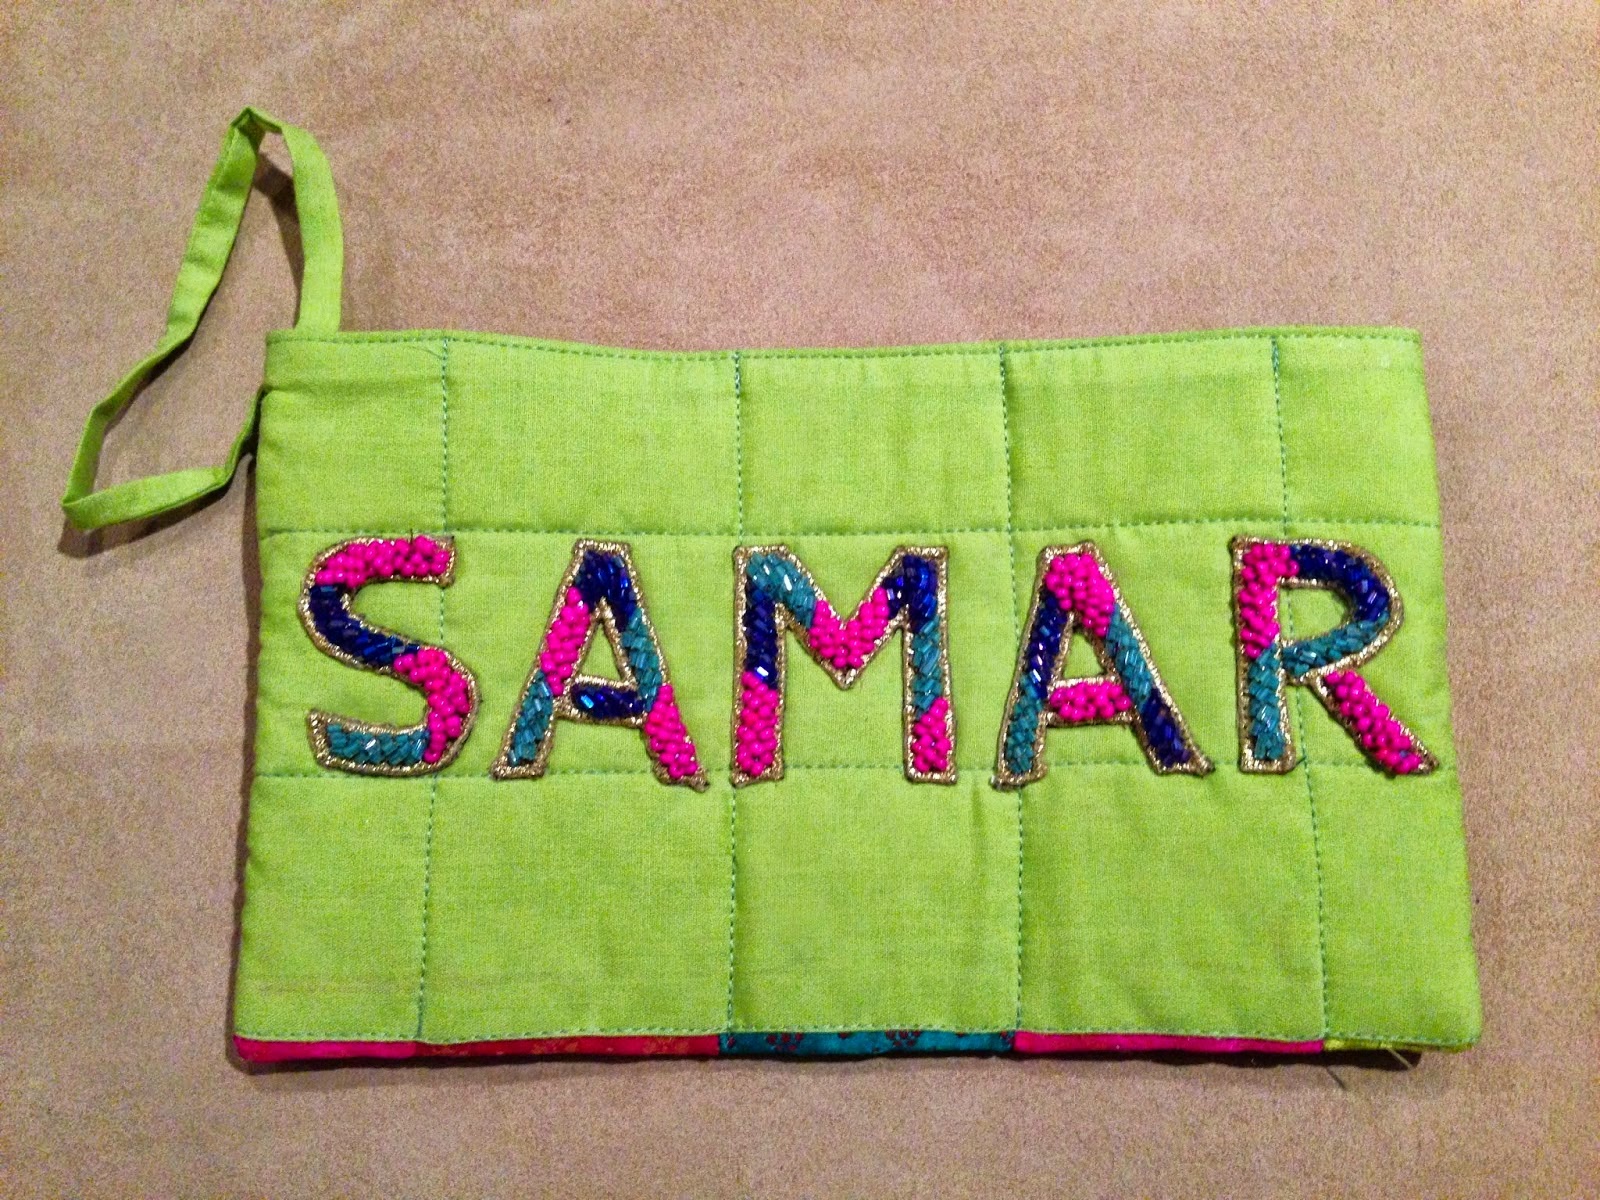 samar-al-ansari-1988-2006-a-gift-thank-you-for-always-remembering-samar